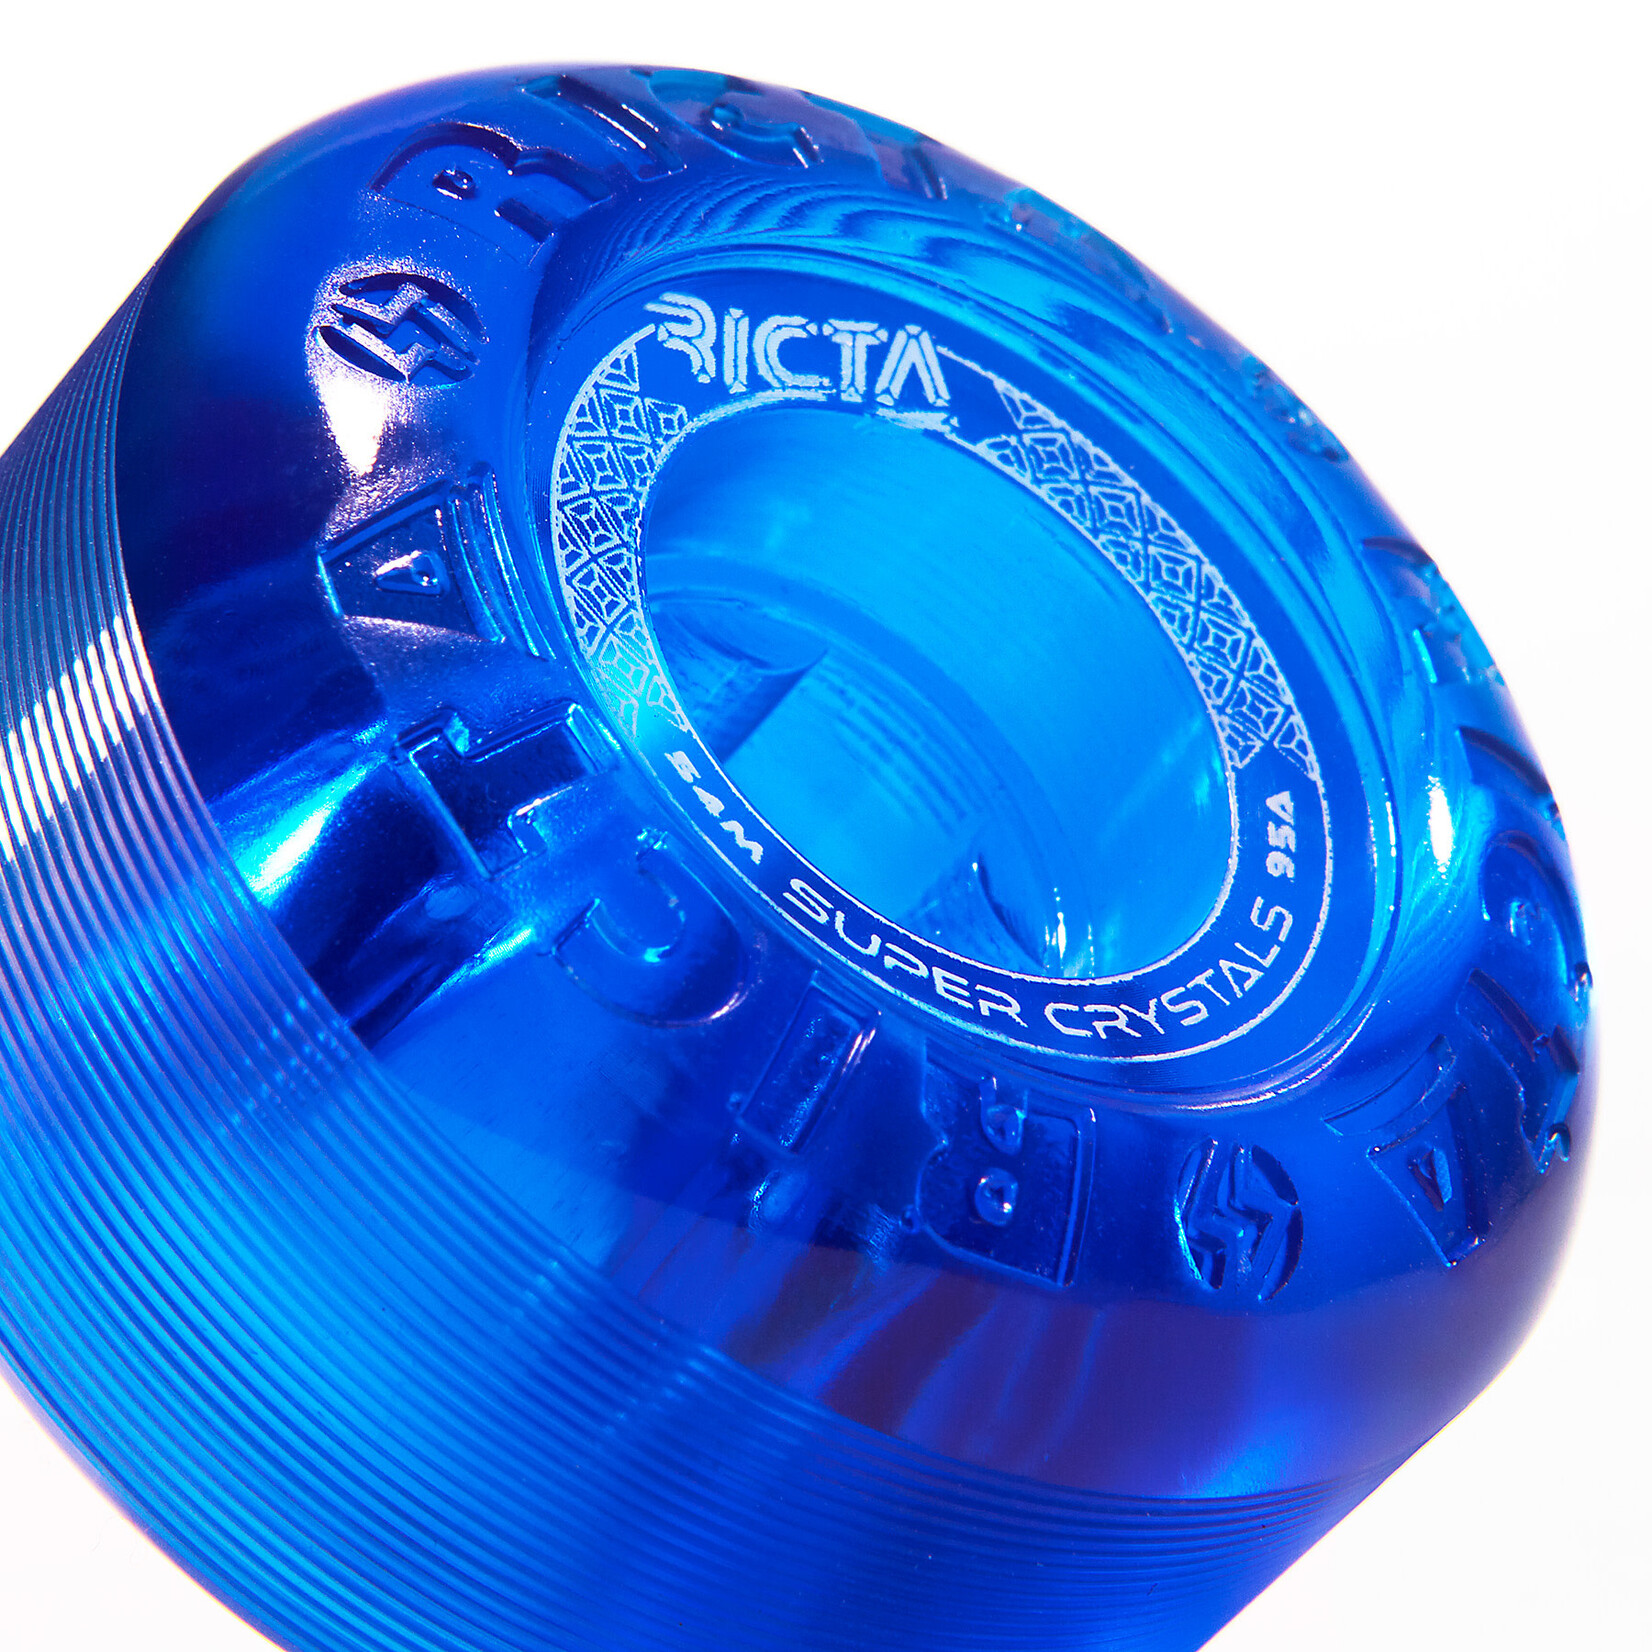 Ricta Ricta Super Crystals Multi Color 95a Skateboard Wheels - 54mm